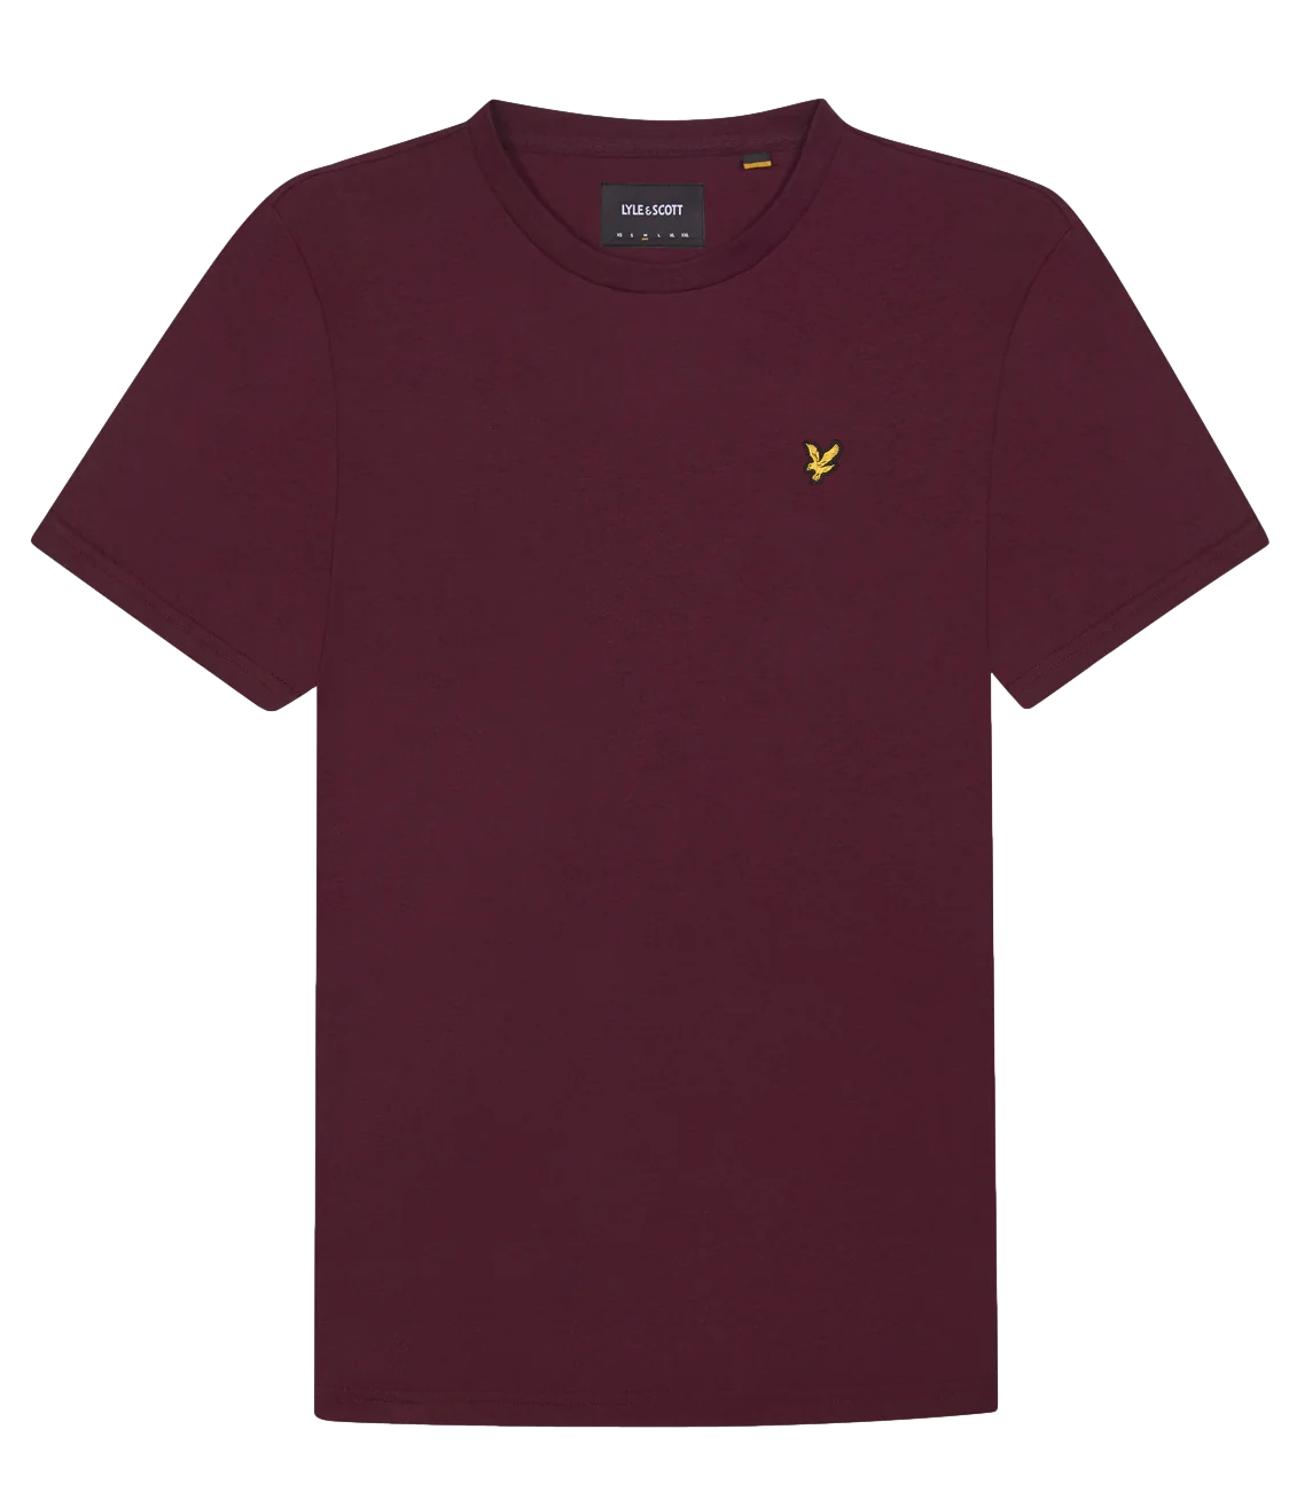 T-shirt Plain Lyle & Scott burgundy